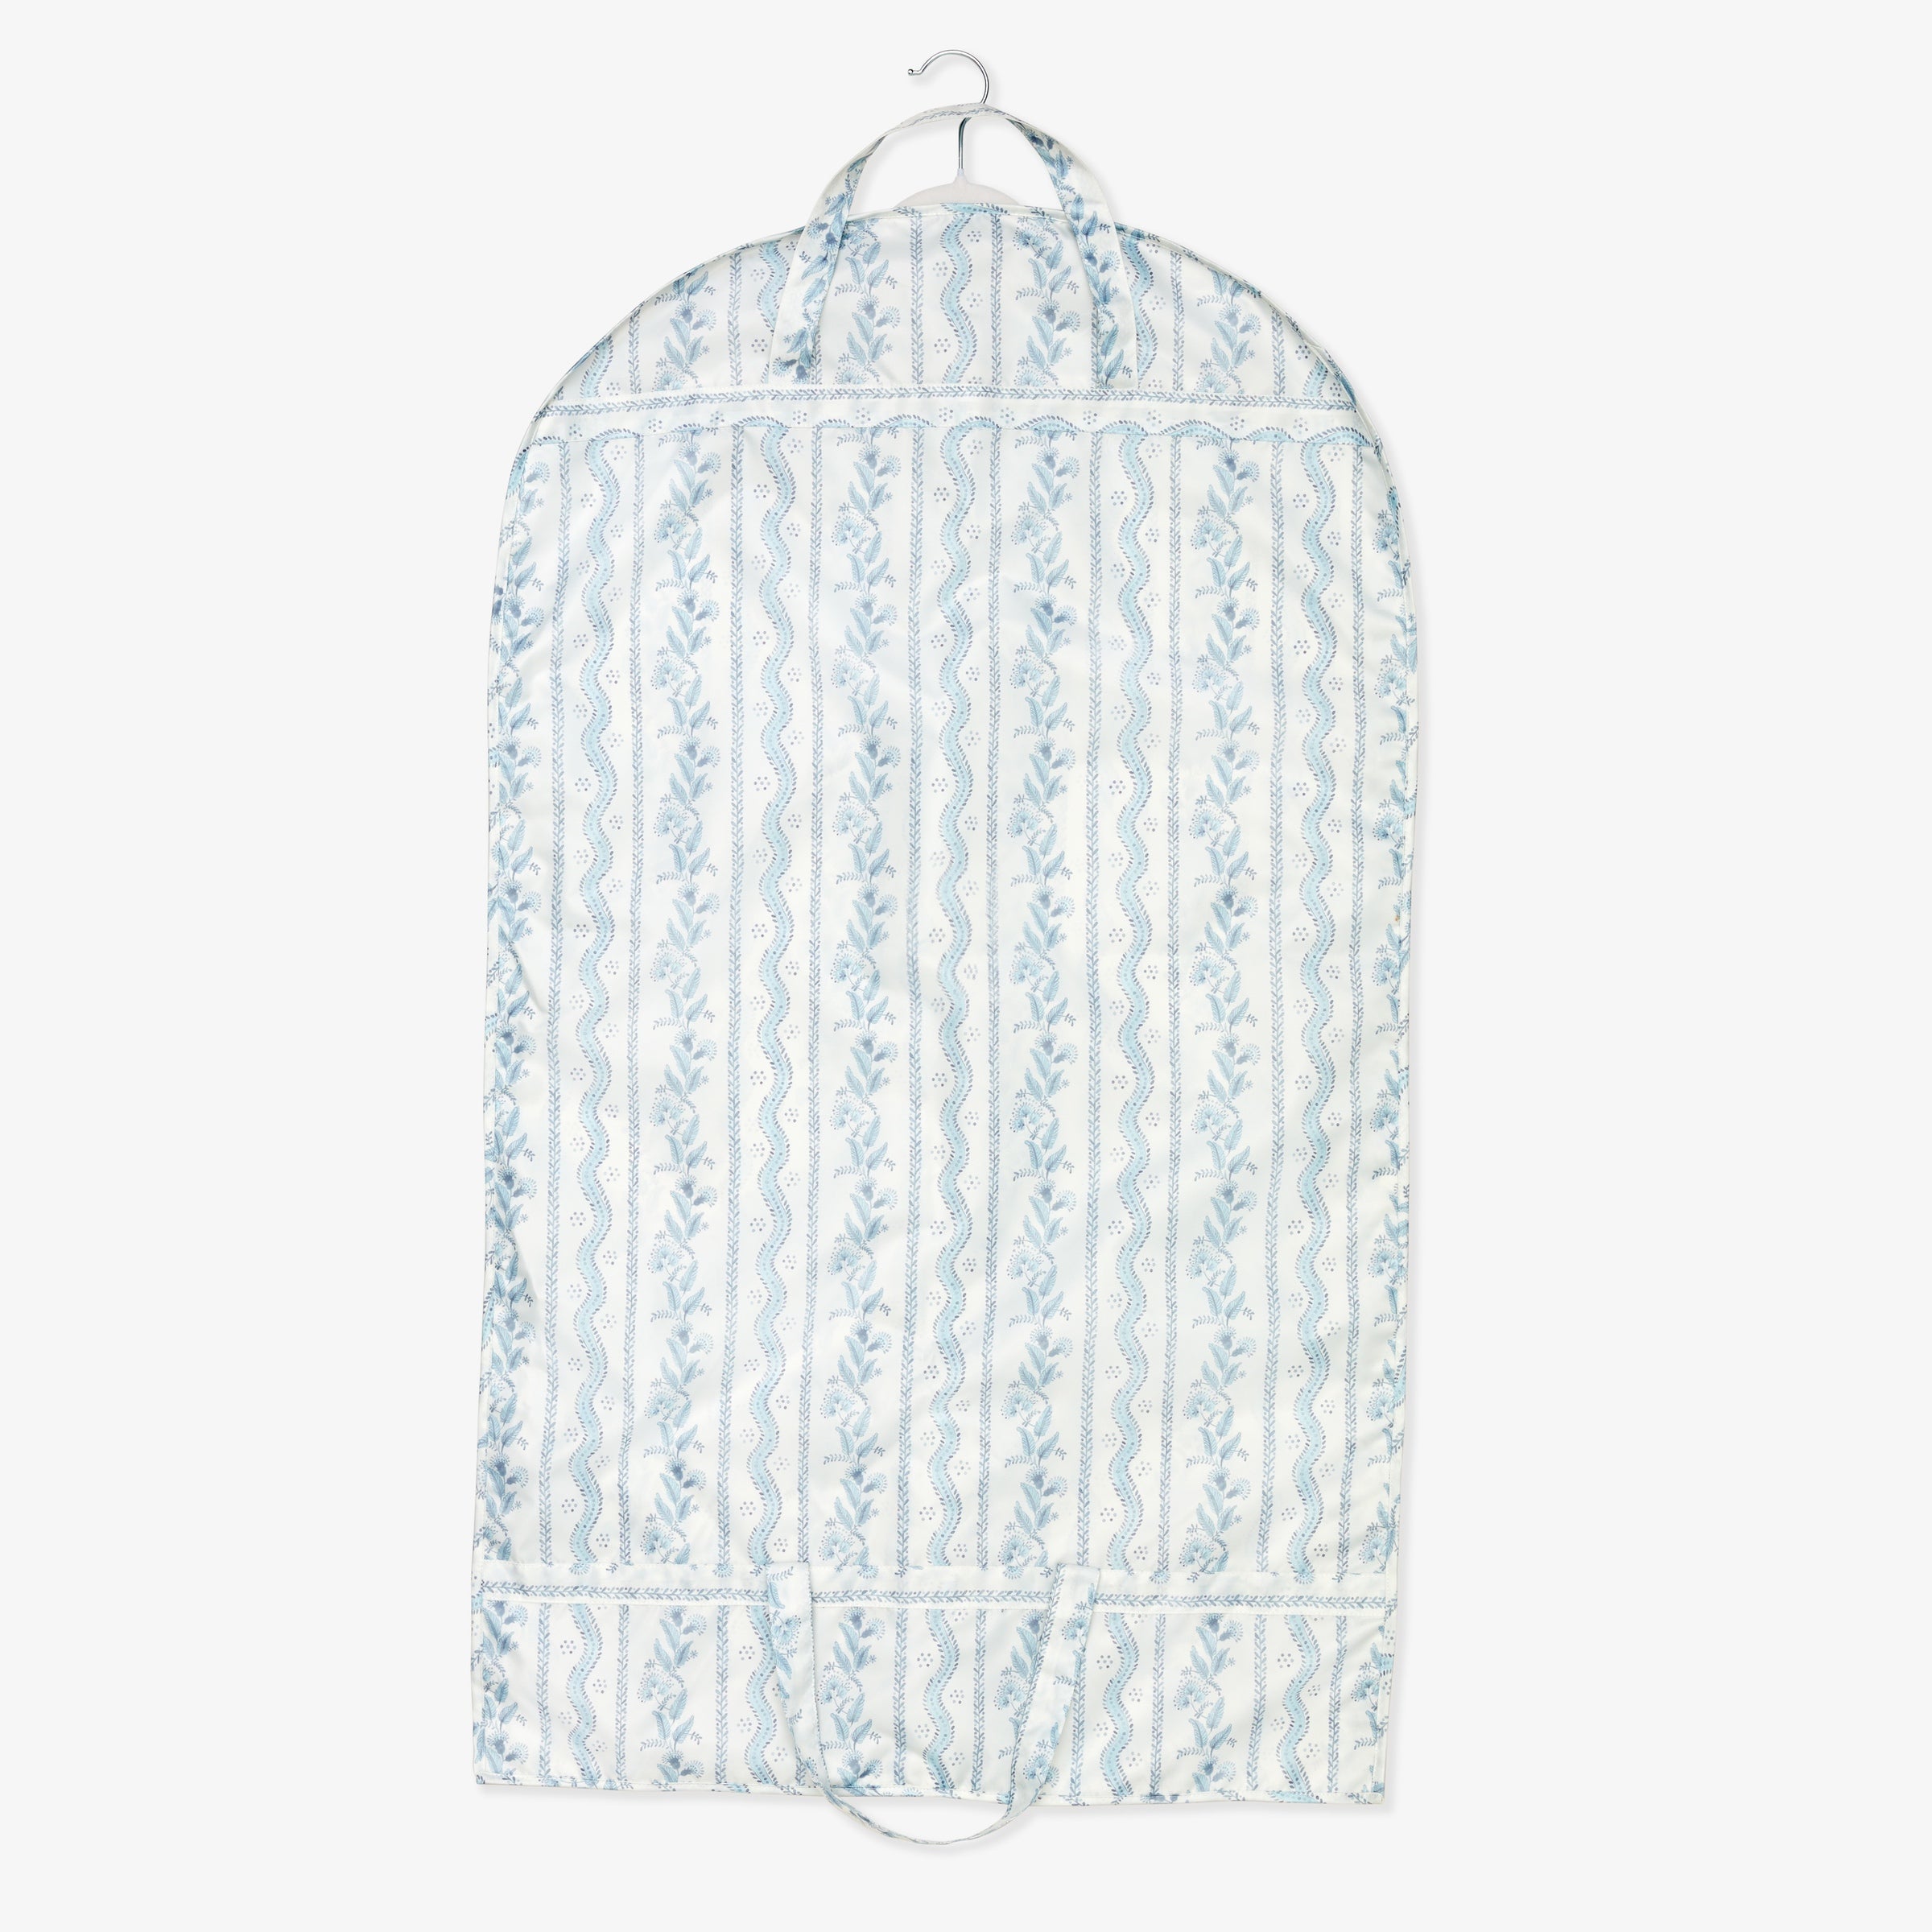 Zipper Printed Non Woven Garment Bag, Capacity: 2-5 Kg